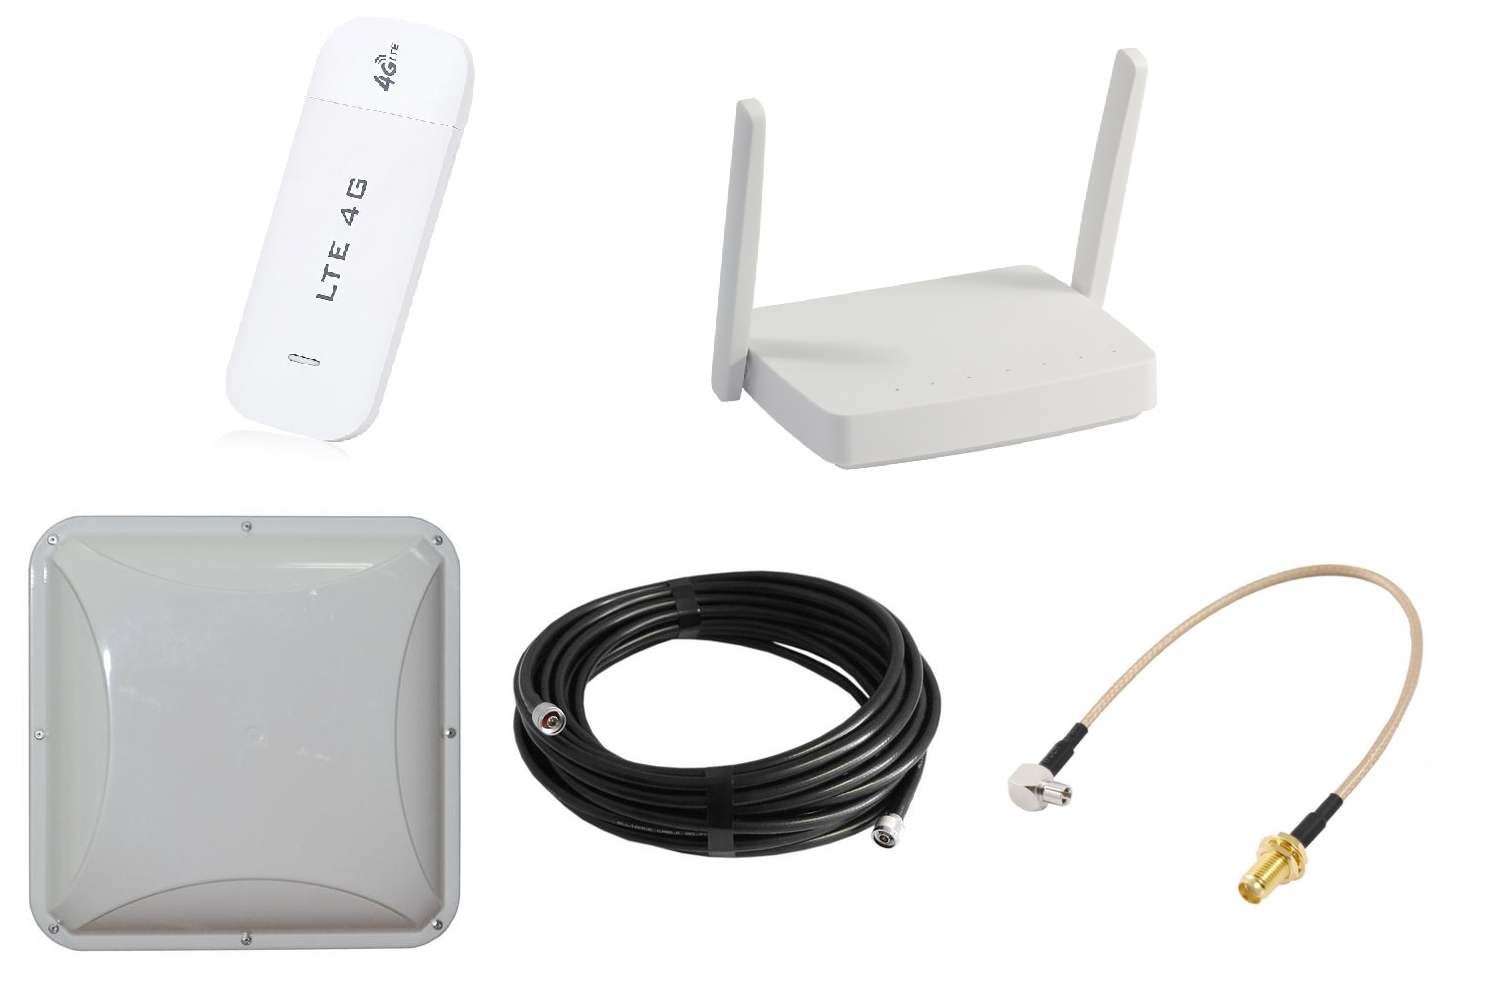 Link 3g 4g. Антенна комнатная VEGATEL Ant-700/2700-Pi (Тип а). GSM модем 3g/4g/LTE. 4g USB-модем, Wi-Fi-роутер. USB 4g модем с внешней антенной.